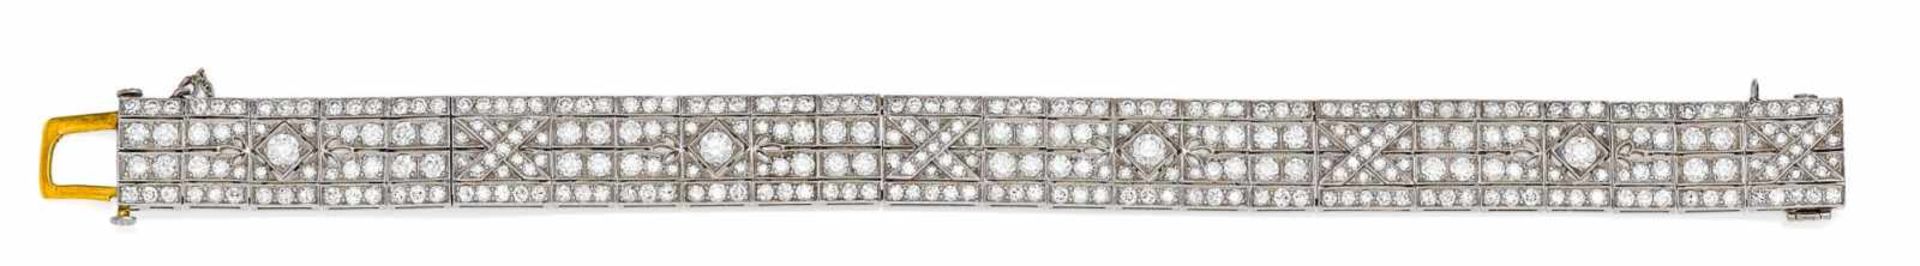 TIFFANY & CO. Diamant-Armband. Wohl USA, um 1930. 900/- Platin, 585/- Gelbgold, Gesamtgewicht: 42,